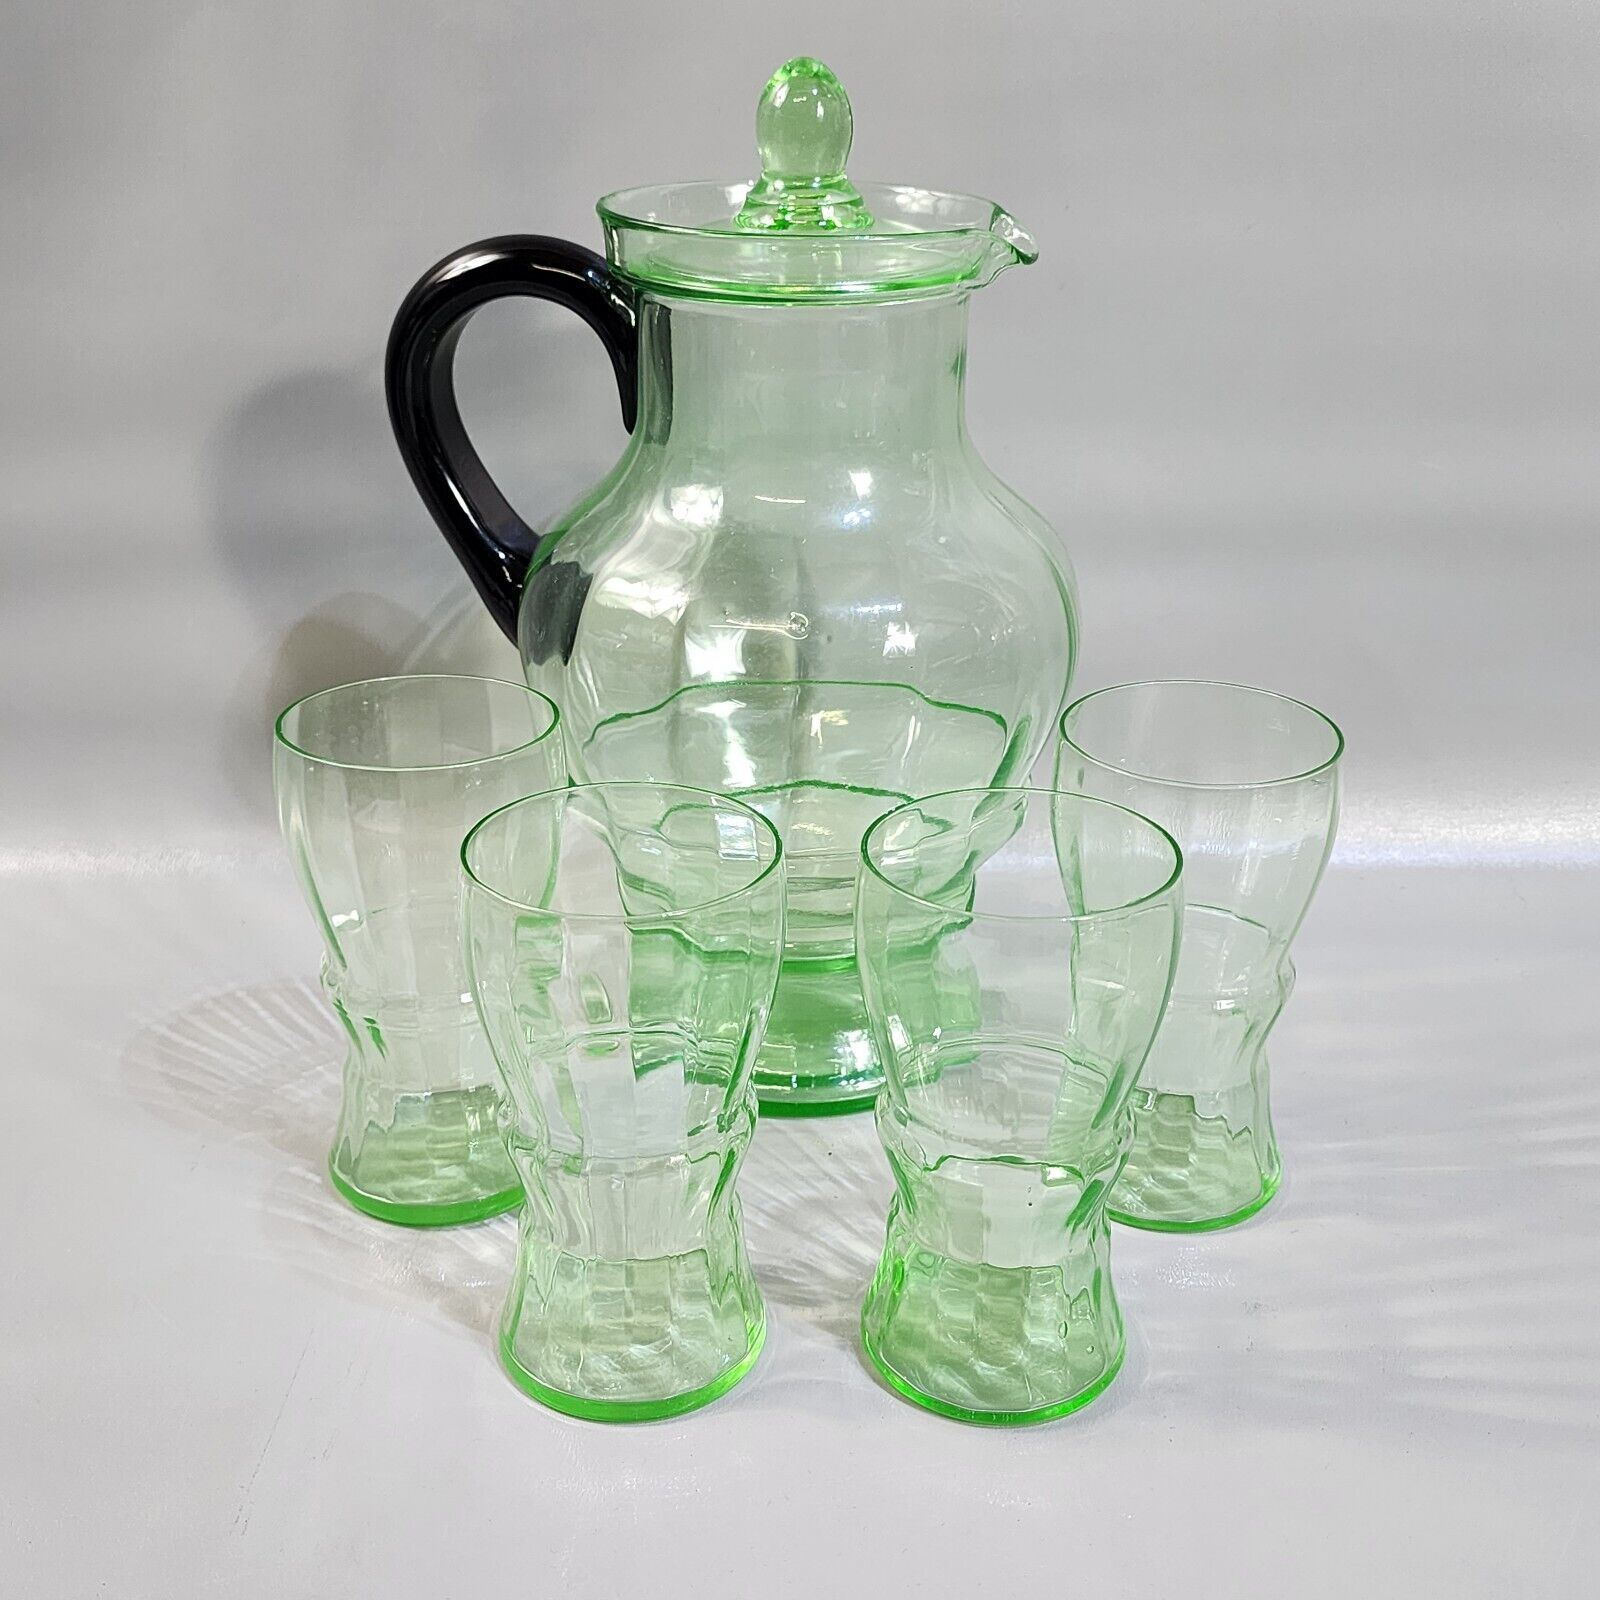 Vintage Art Deco Depression Glass Green Pitcher & Drinking Glasses Drinkware Set